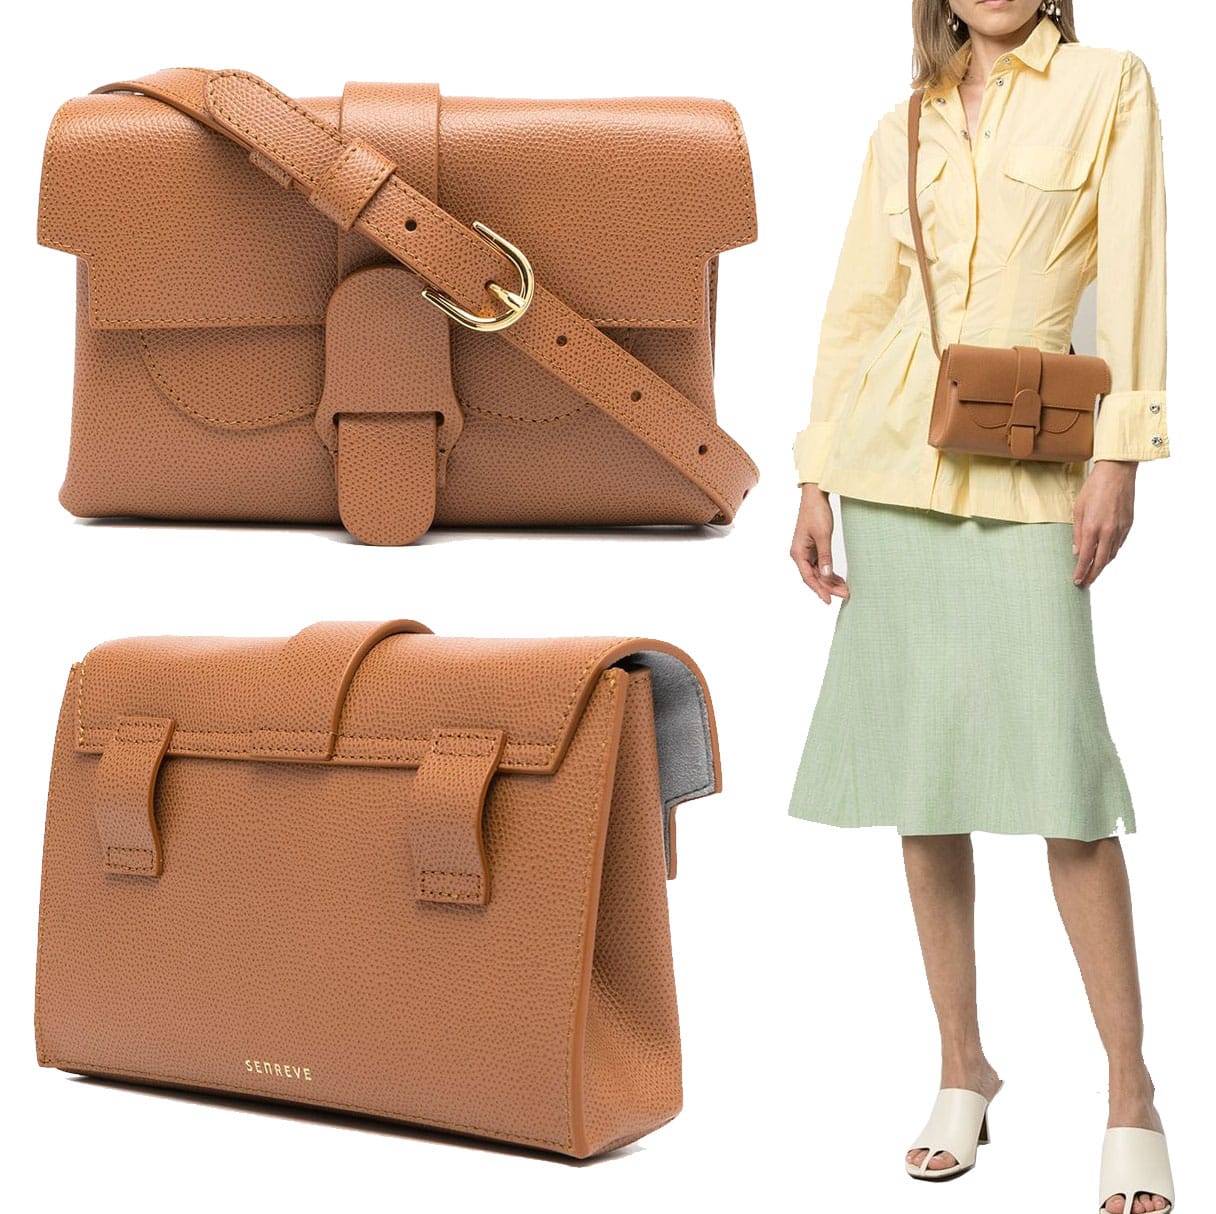 Senreve's Aria belt bag has a minimalist, classic look, featuring an adjustable waist strap and a detachable shoulder strap